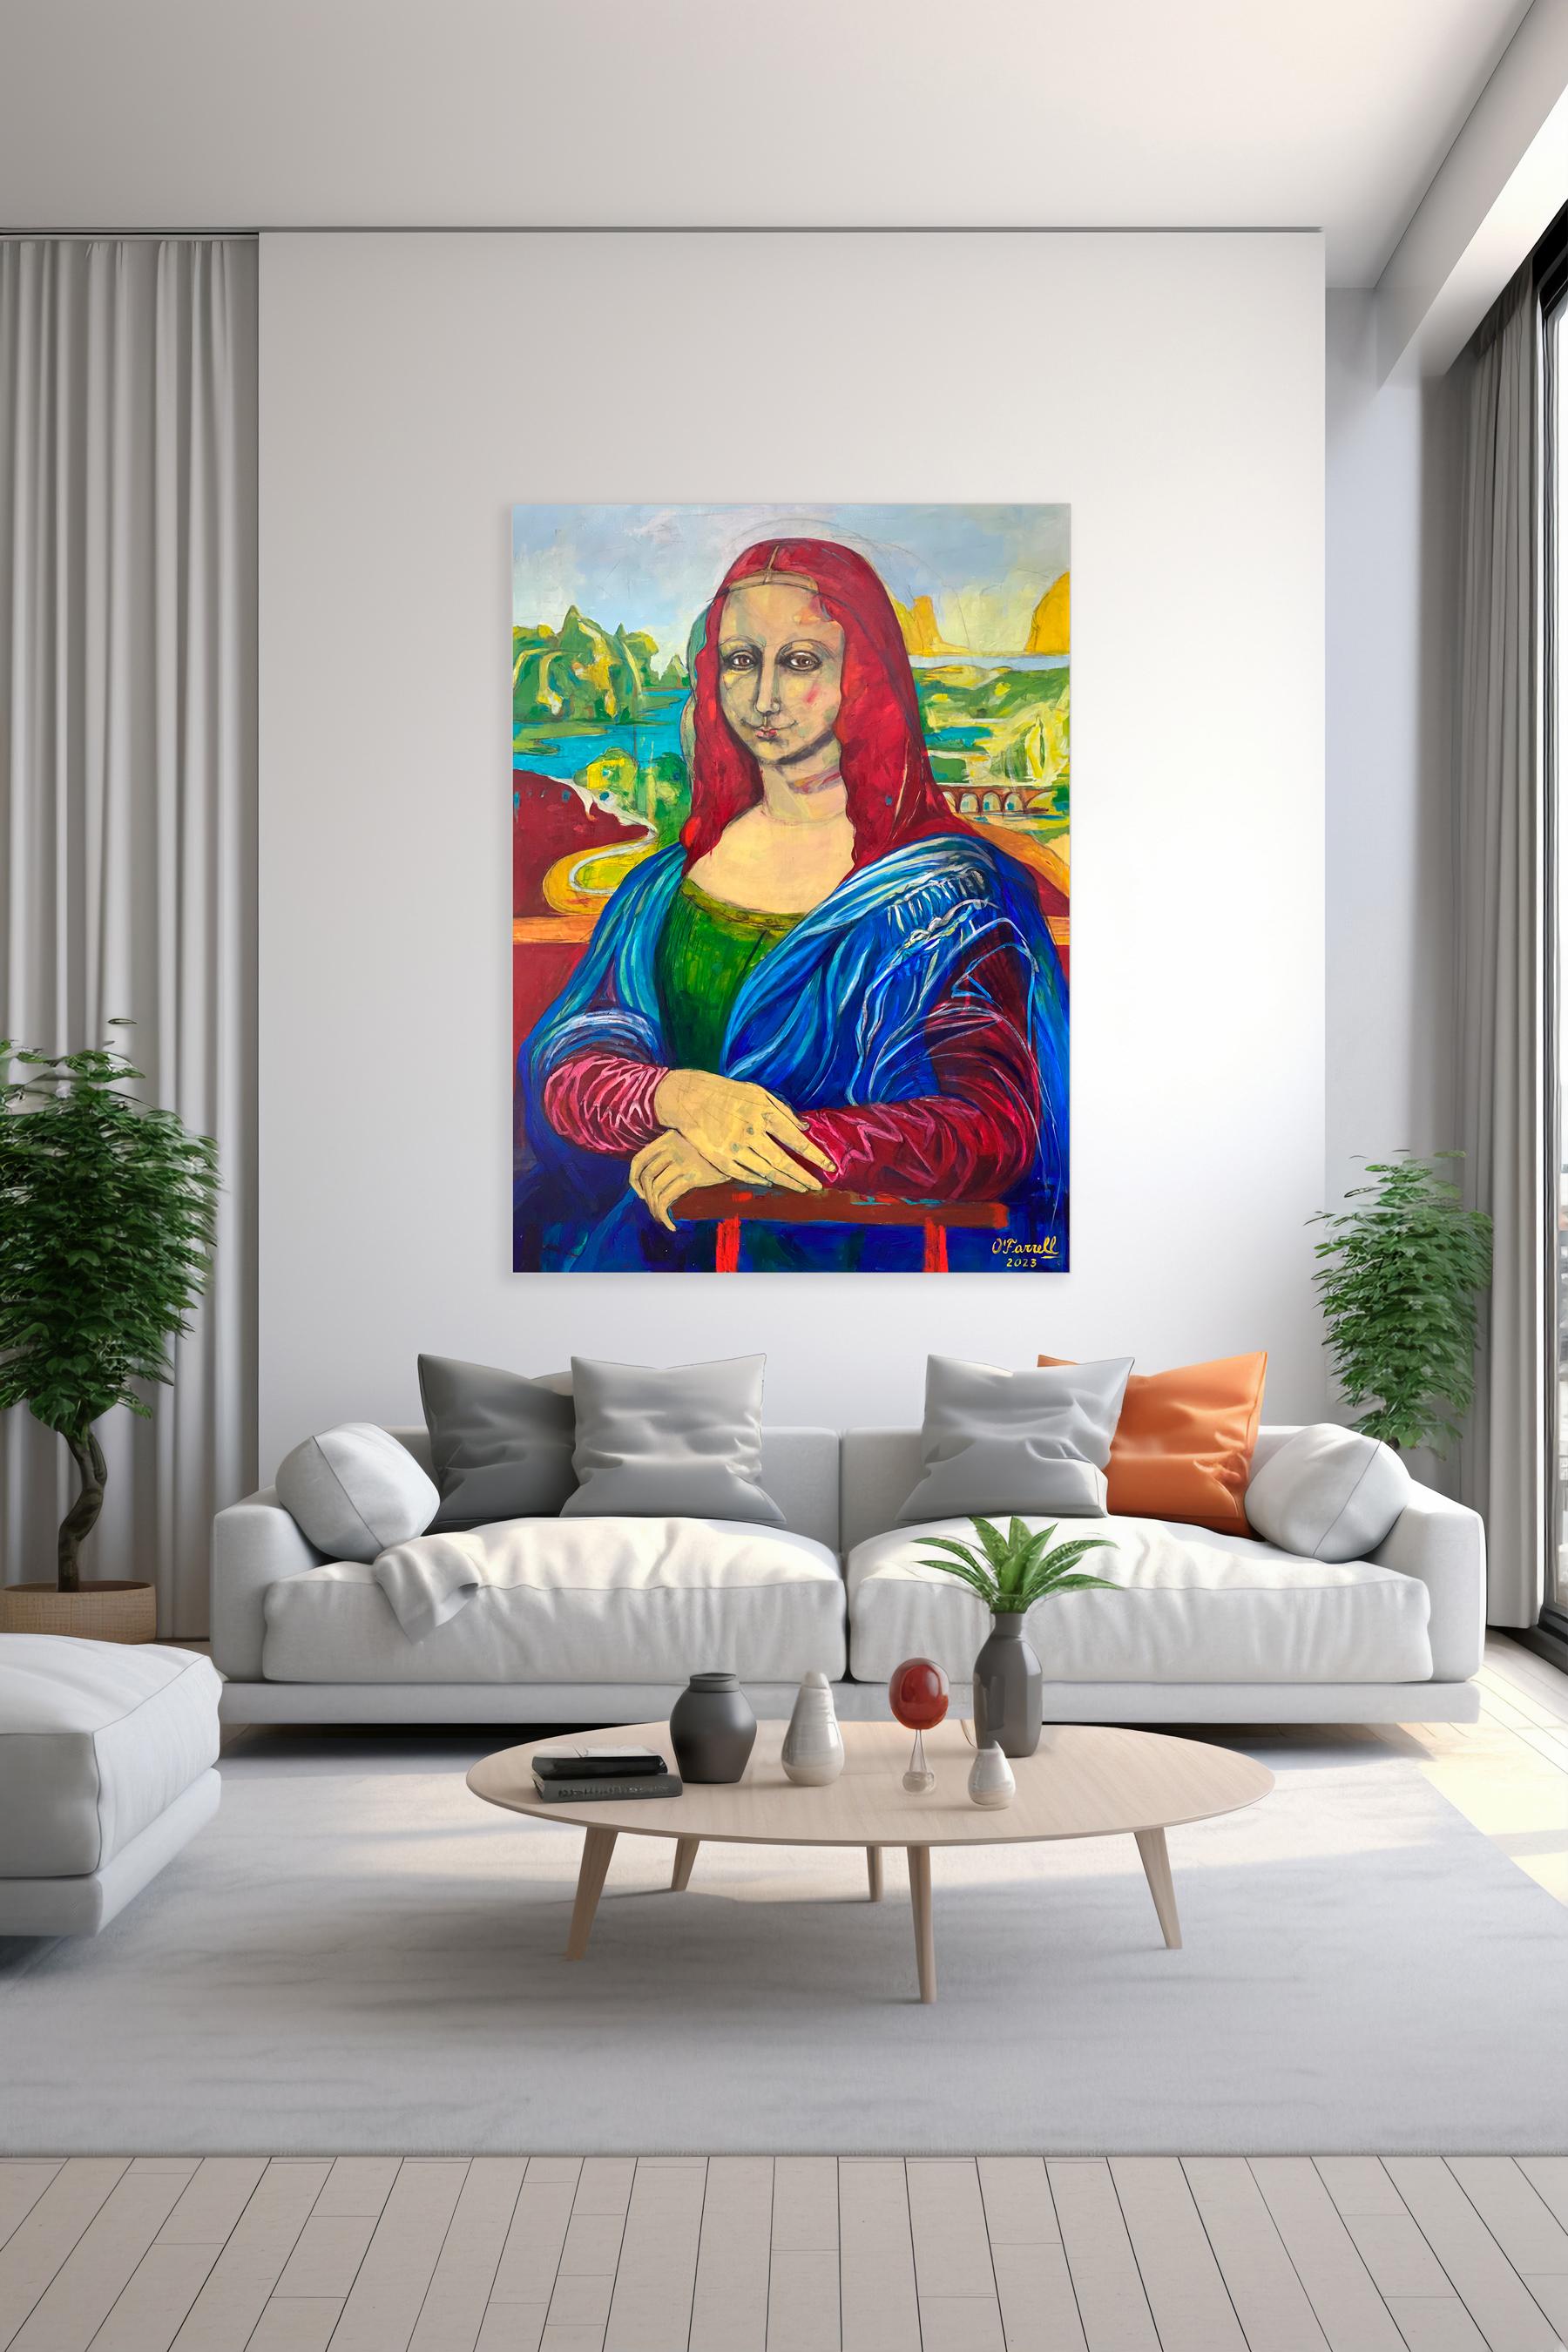 Reinterpretation of the artwork “La Gioconda” by Leonardo Da Vinci at the request of a commercial venture and businessman.